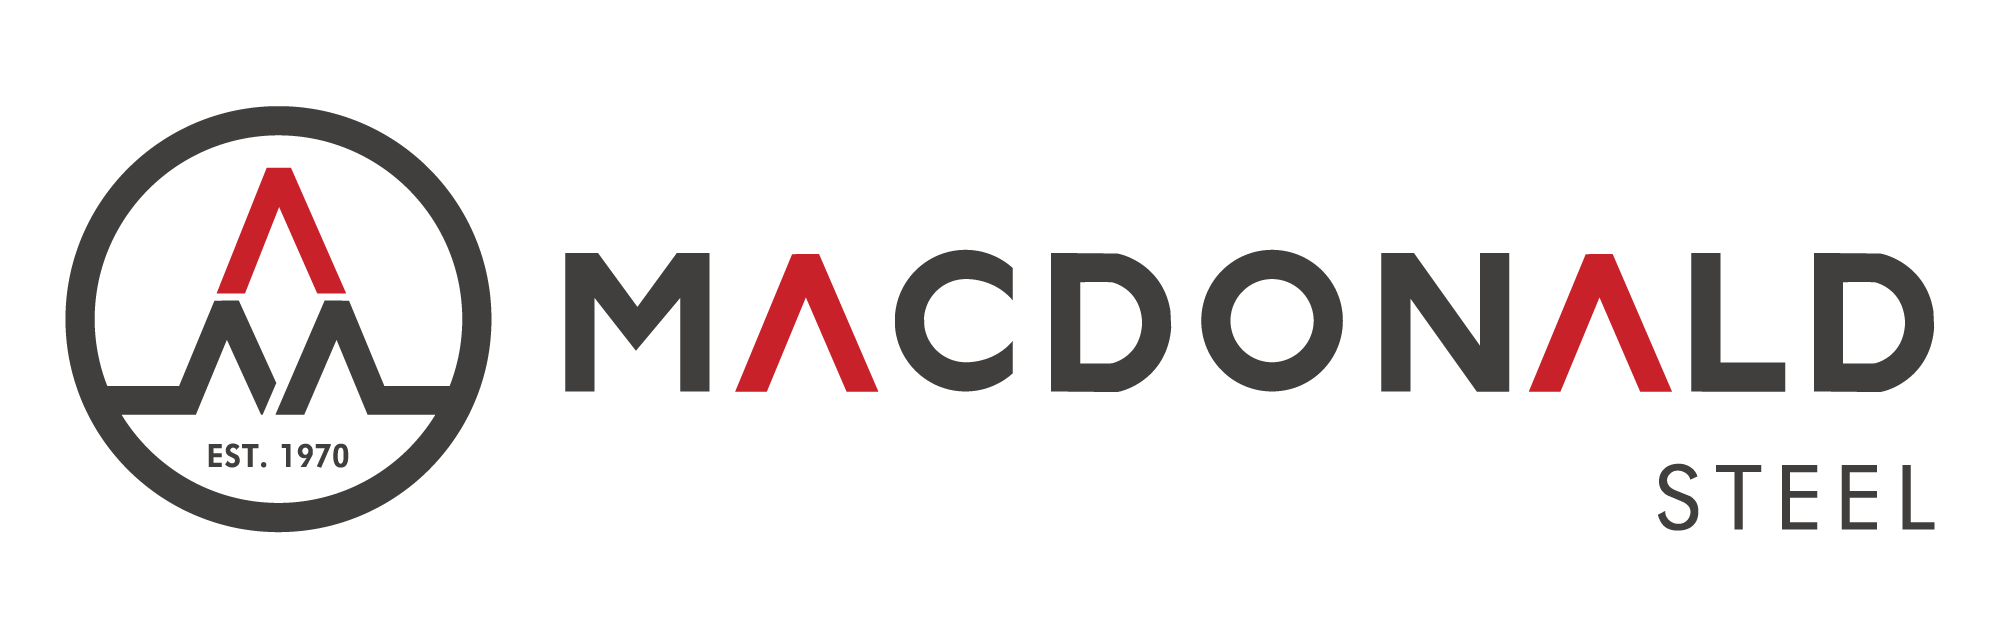 Macdonald-Steel-logo-Grey